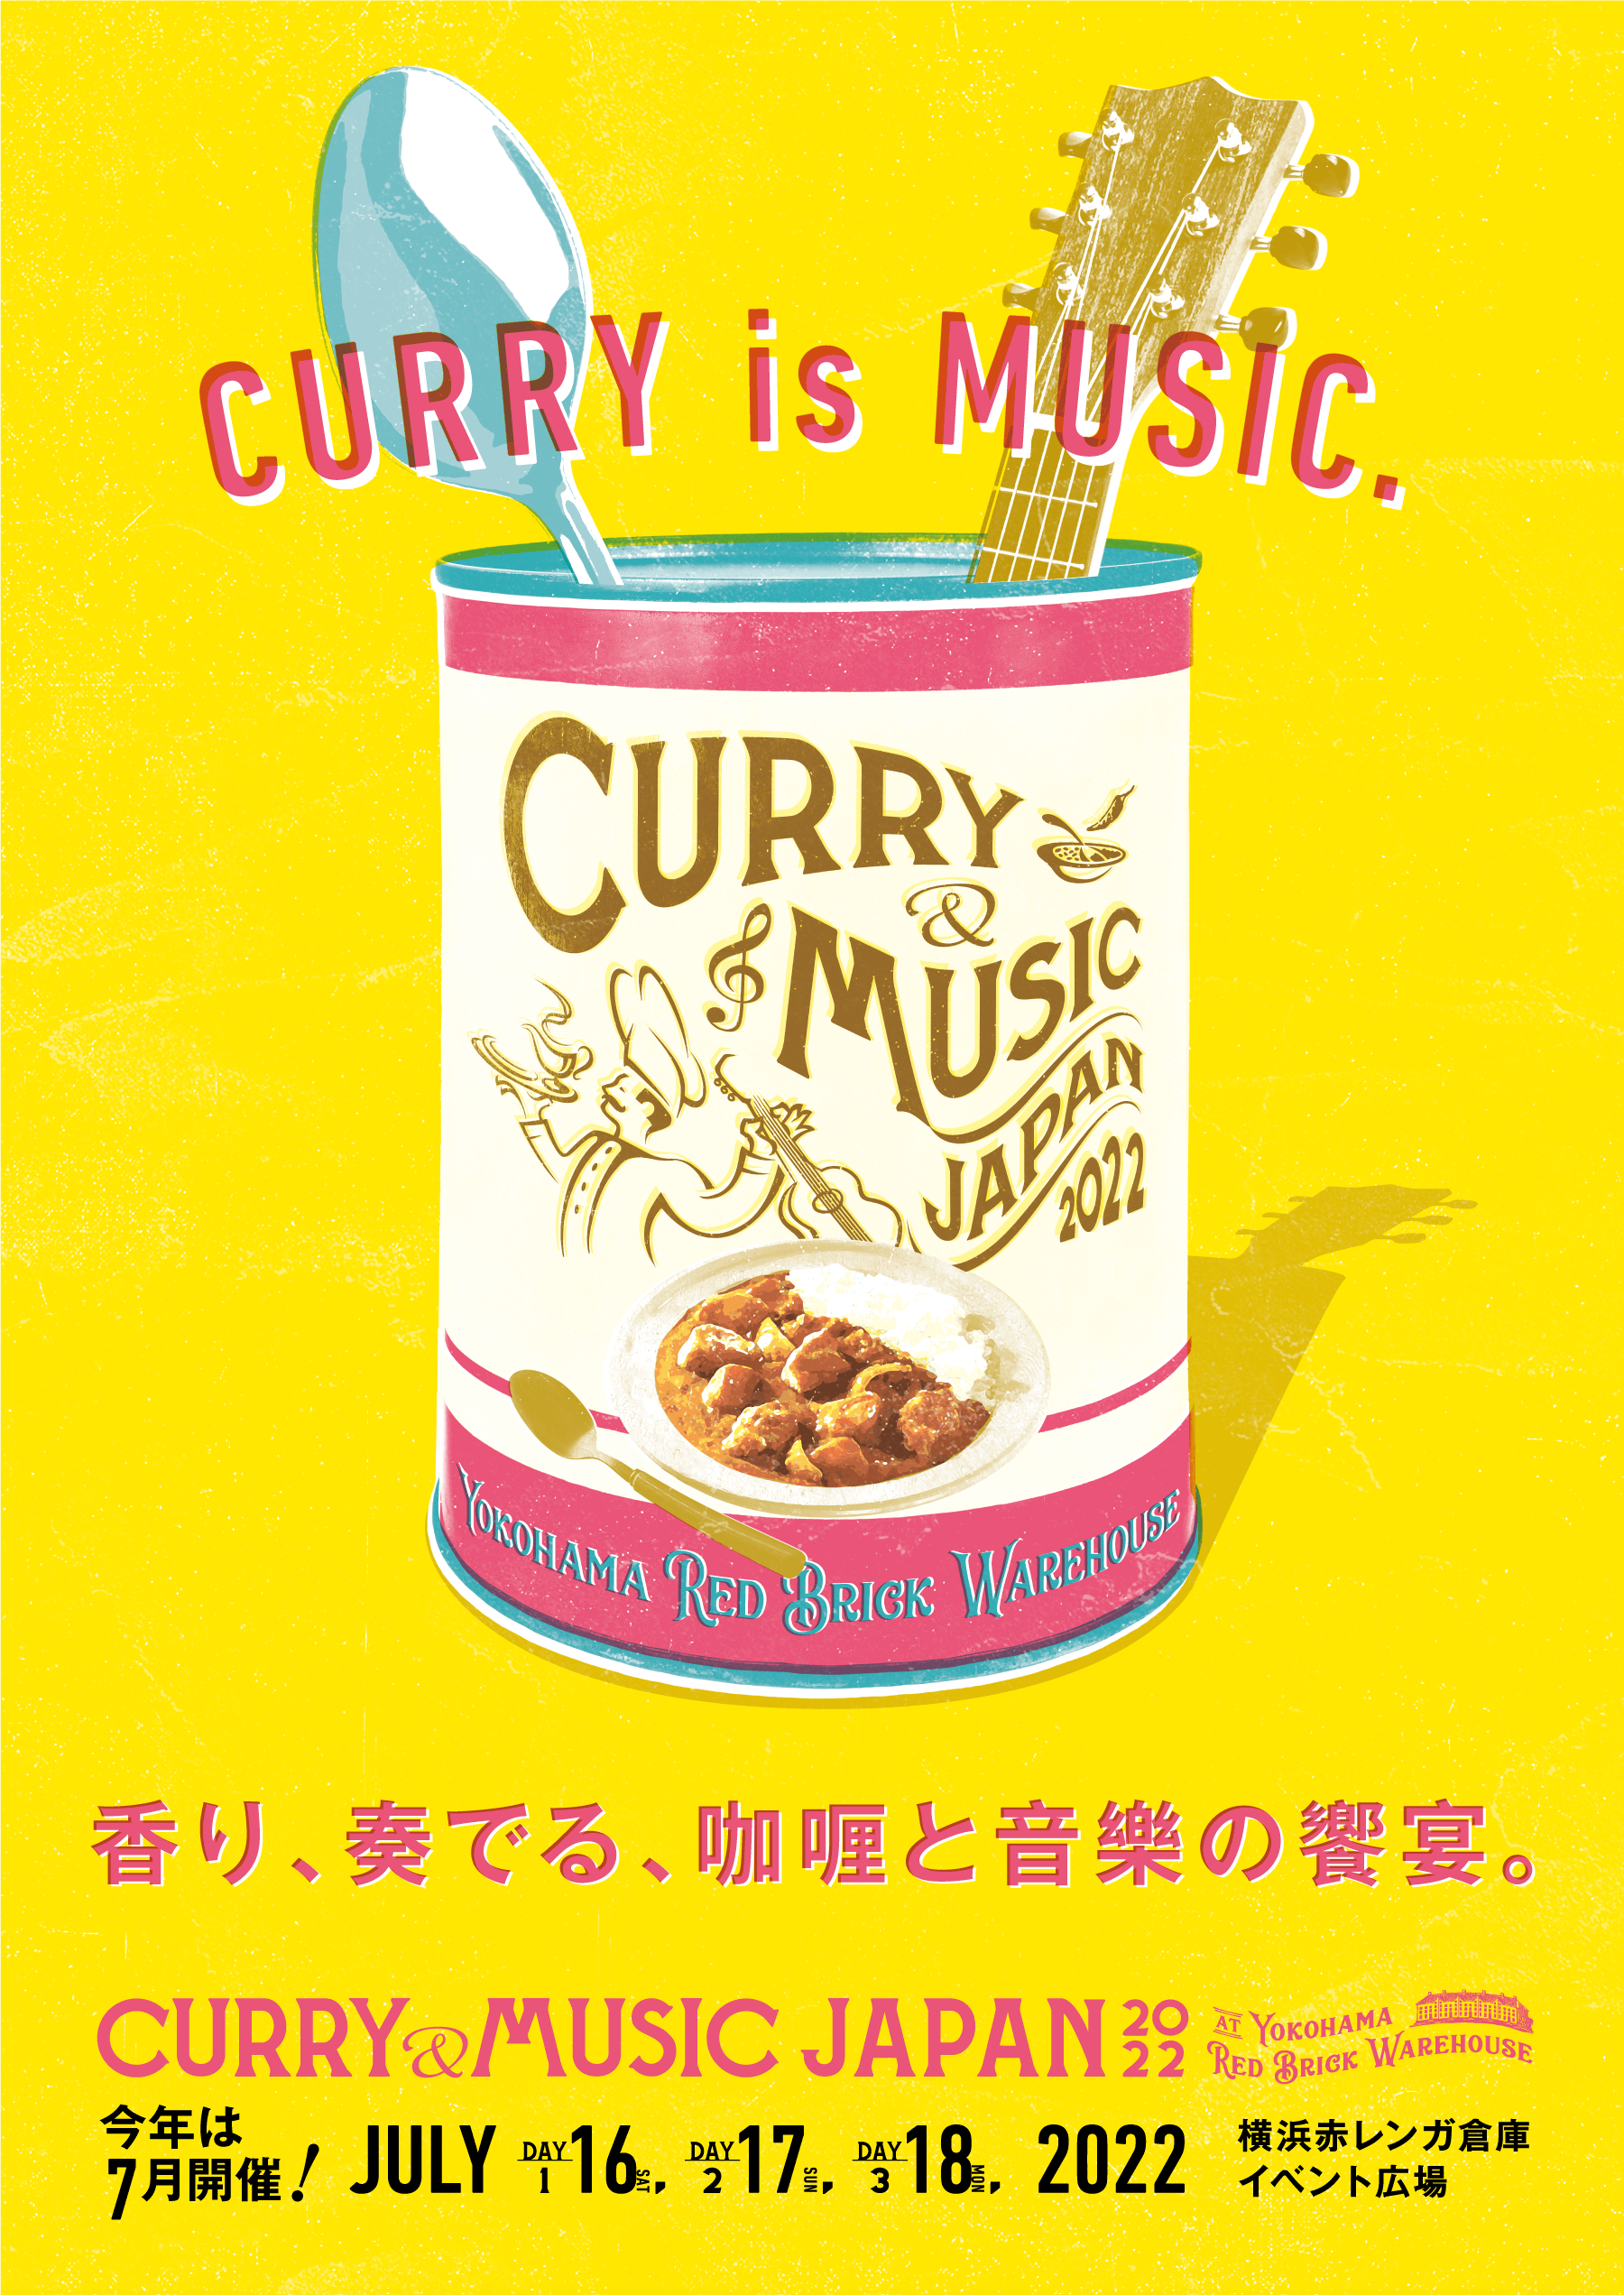 CURRY&MUSIC JAPAN 2022 | 香り、奏でる、咖喱と音楽の饗宴。『CURRY&MUSIC JAPAN 2022』2022年7月16日(土)・17日(日)・18日(月・祝)横浜赤レンガ倉庫イベント広場にて開催。